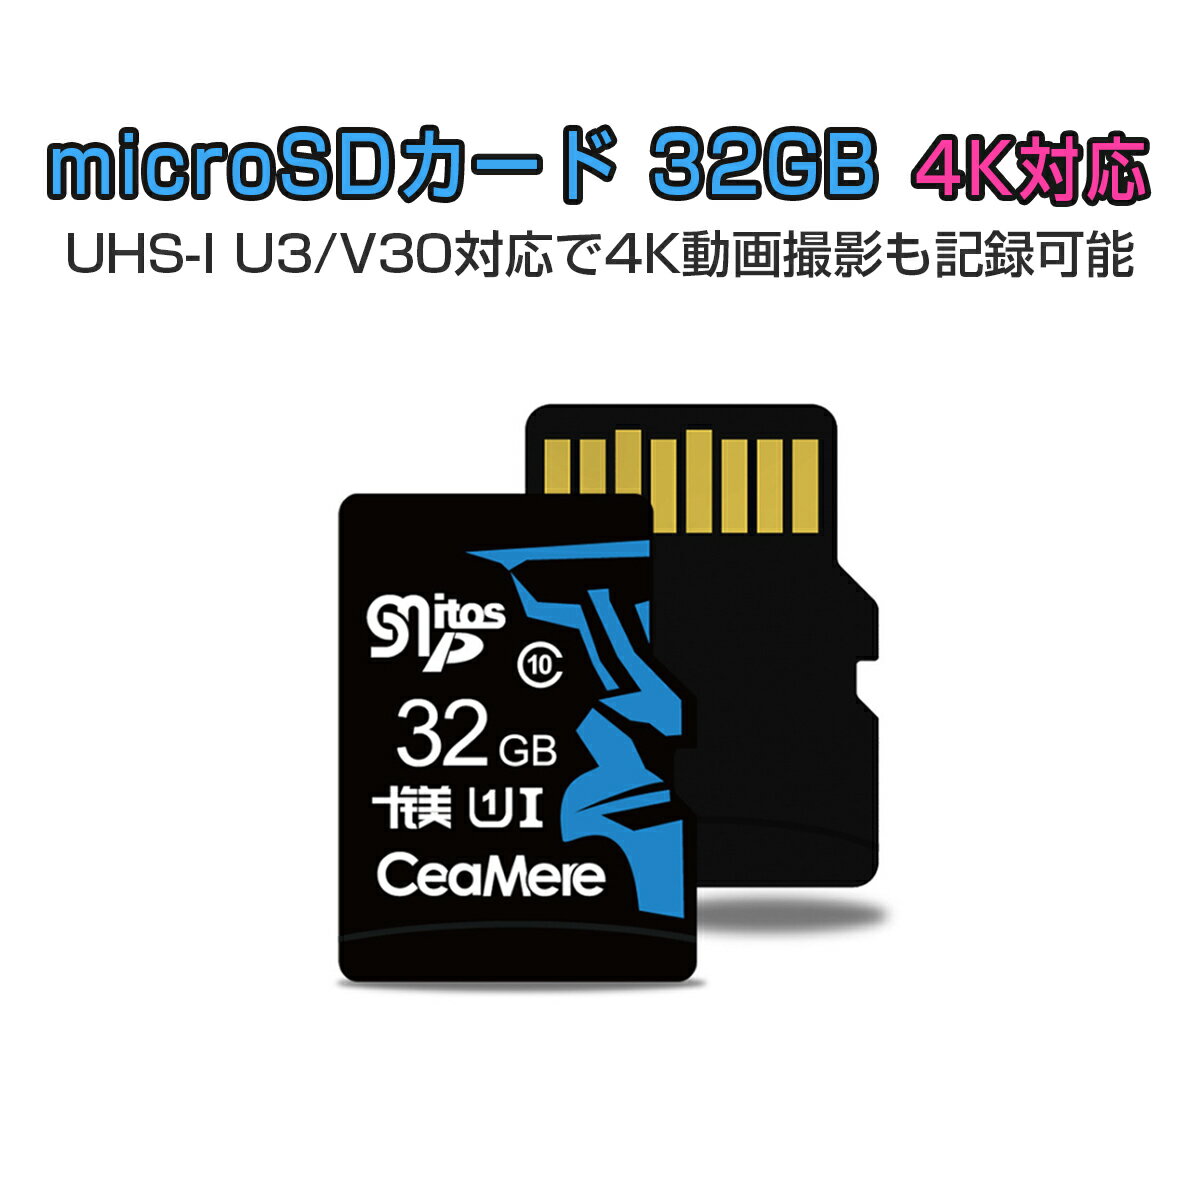 SSL MicroSDカード 32GB UHS-I V30 超高速 最大90MB/sec 3D MLC NAND採用 ASチップ 高耐久 MicroSD マイクロSD microSDXC 300x SDカード変換アダプタ USBカードリーダー付き 6ヶ月保証